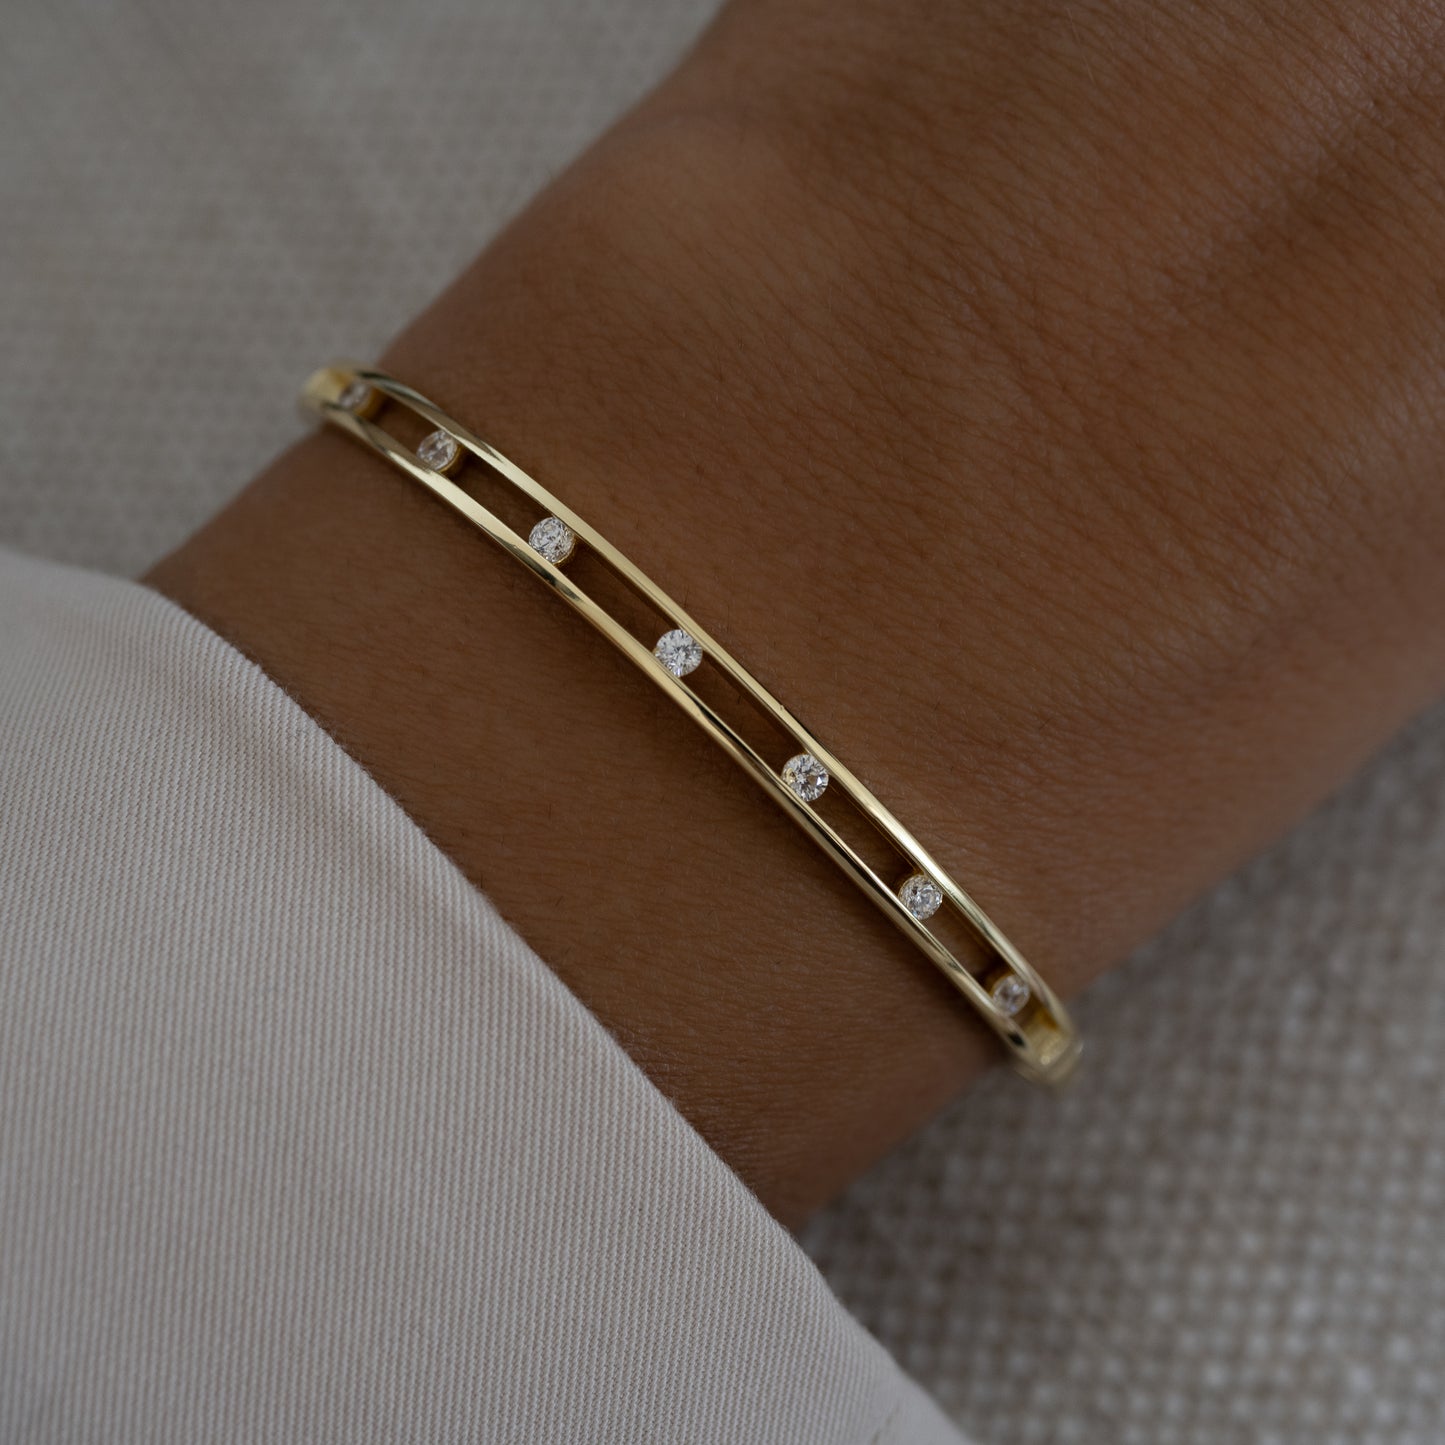 gold bangle bracelet with diamonds on a hand model